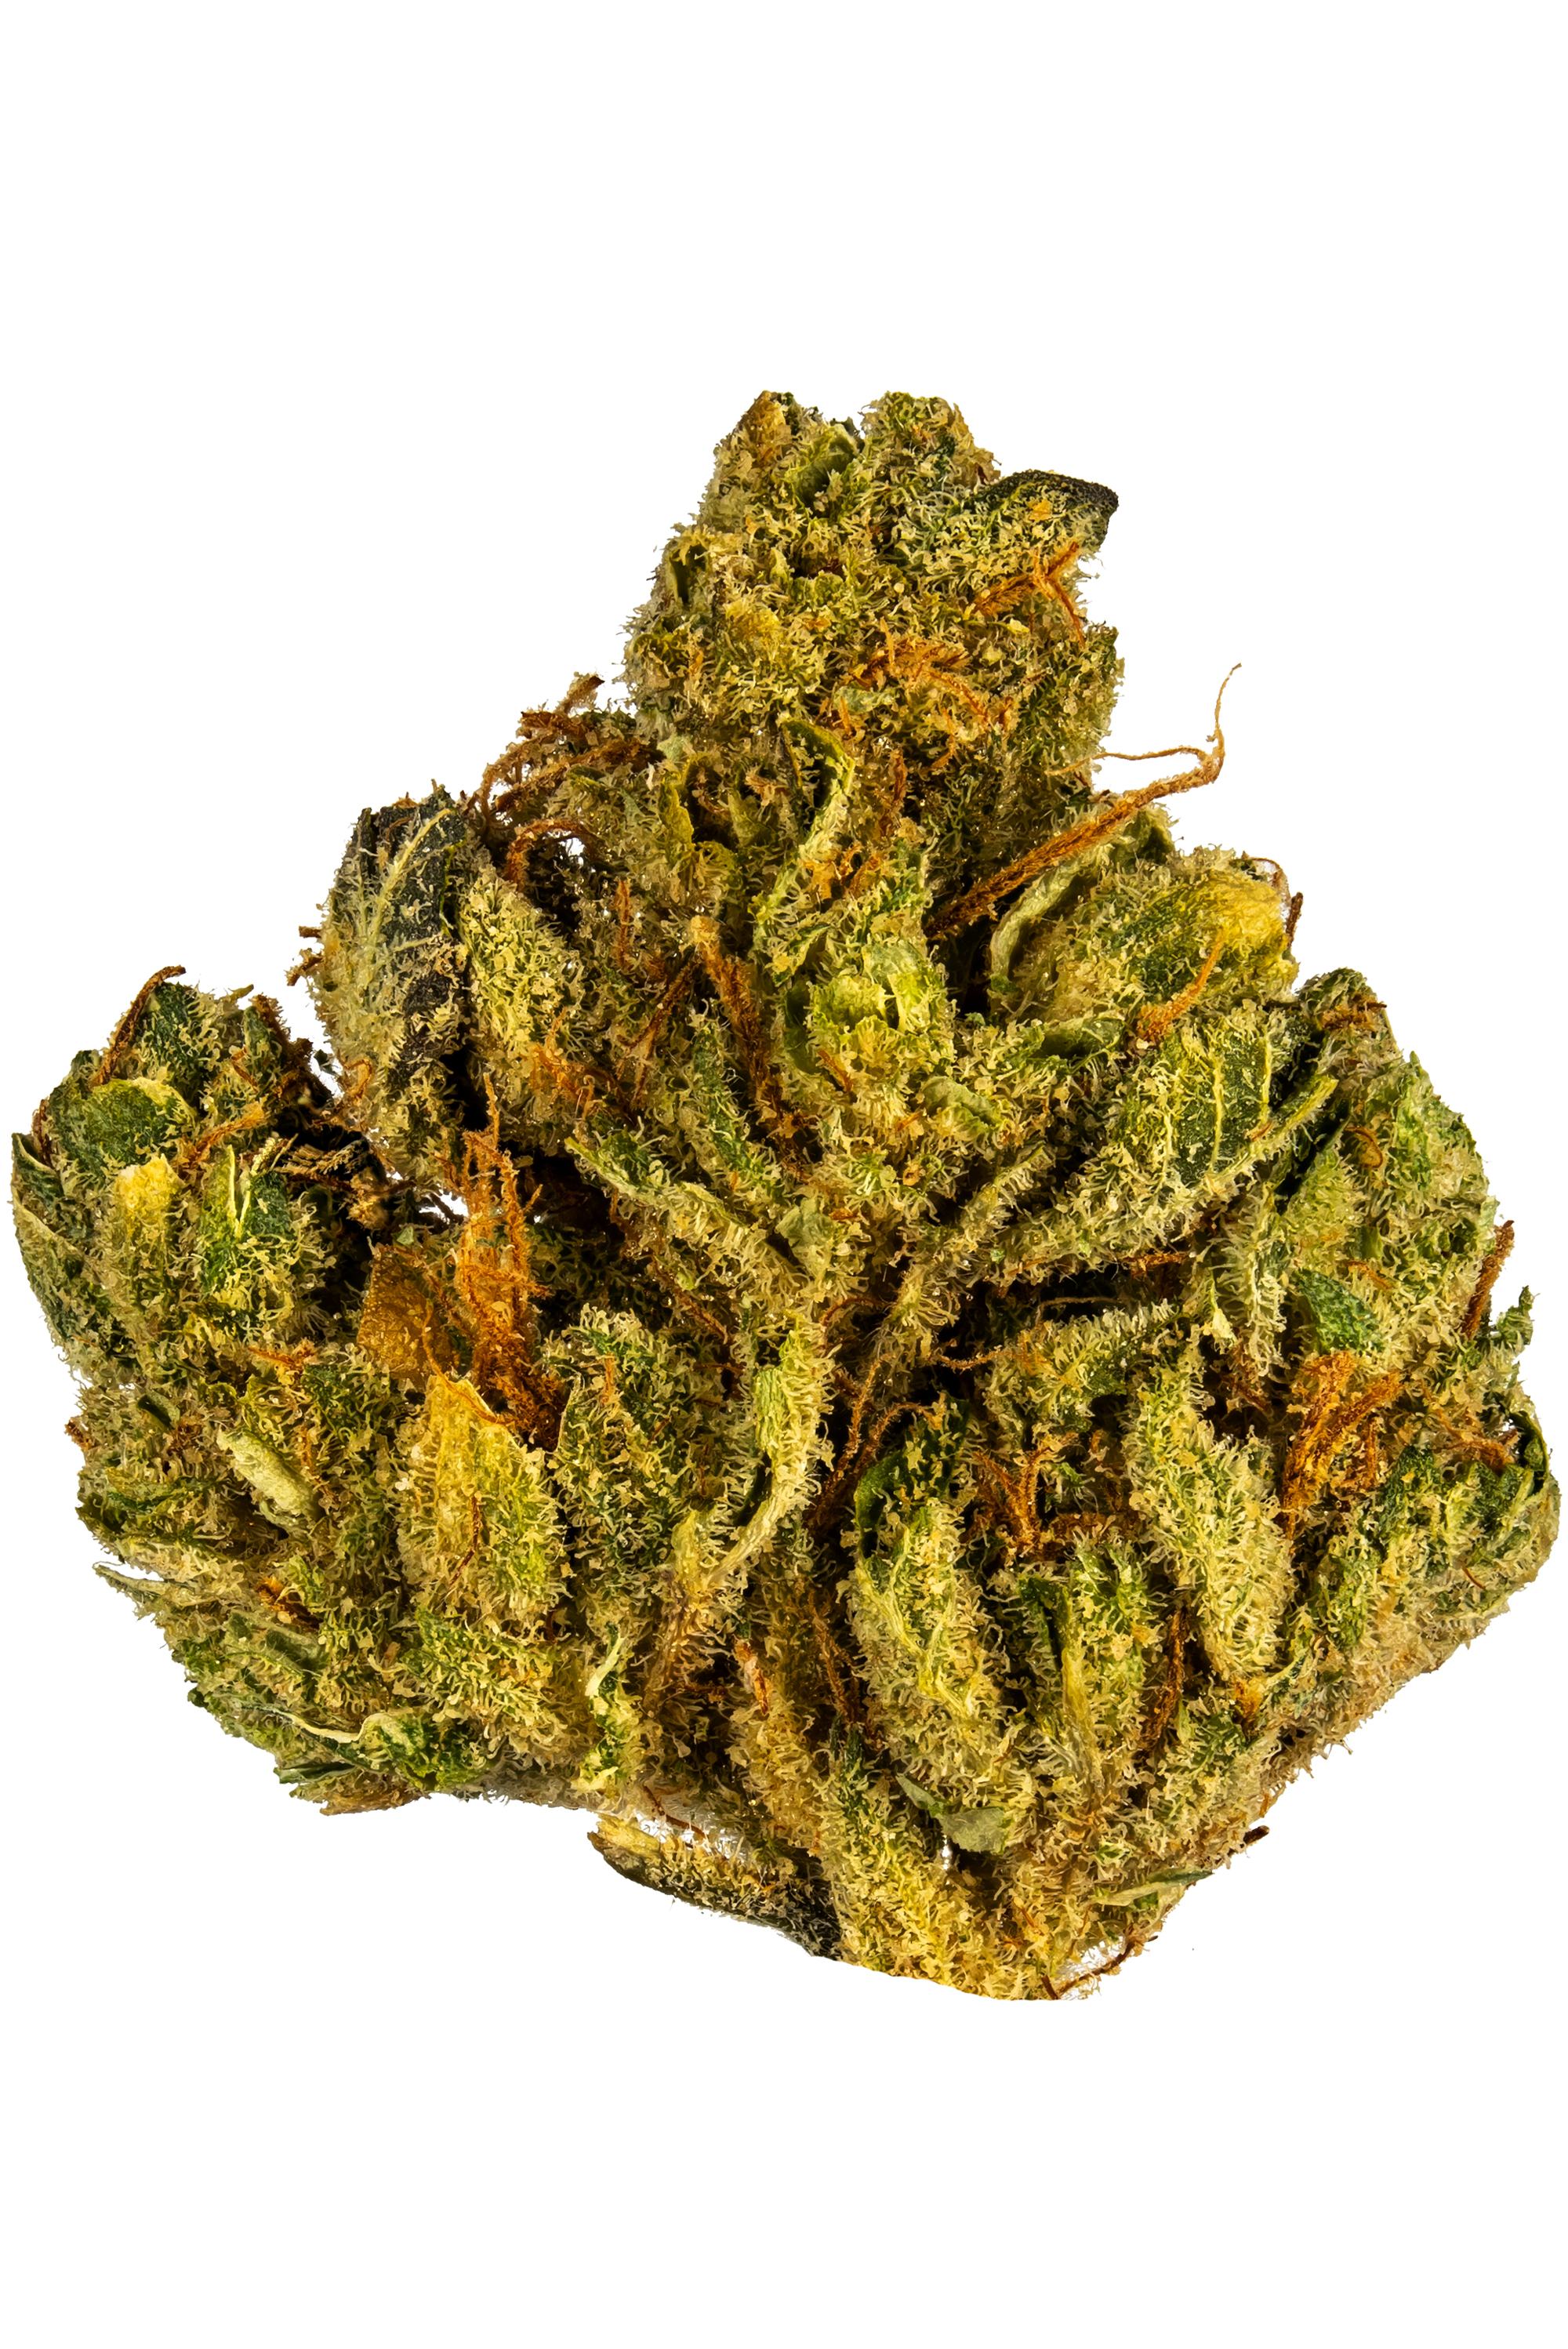 Stardawg Guava Strain of Marijuana - Weed - Cannabis - Herb - Herb